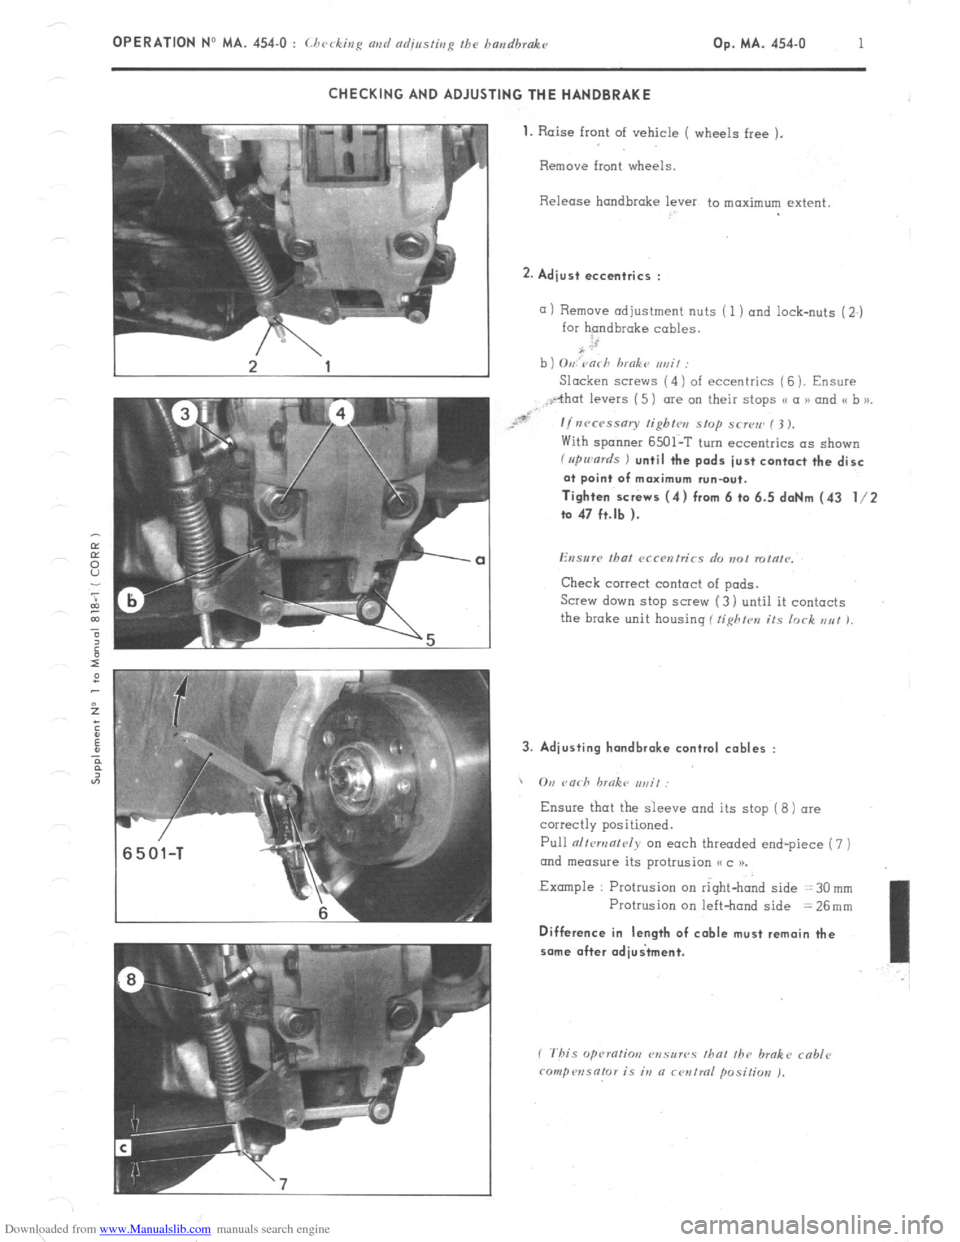 Citroen CX 1977 1.G Workshop Manual Downloaded from www.Manualslib.com manuals search engine OPERATION No MA. 454-O : Lhcckiu~ avd adjnsfbrR fhe bandbrake op. MA. 454-u I CHECKING AND ADJUSTING THE HANDBRAKE 
1. 
Raise front of vehicle 